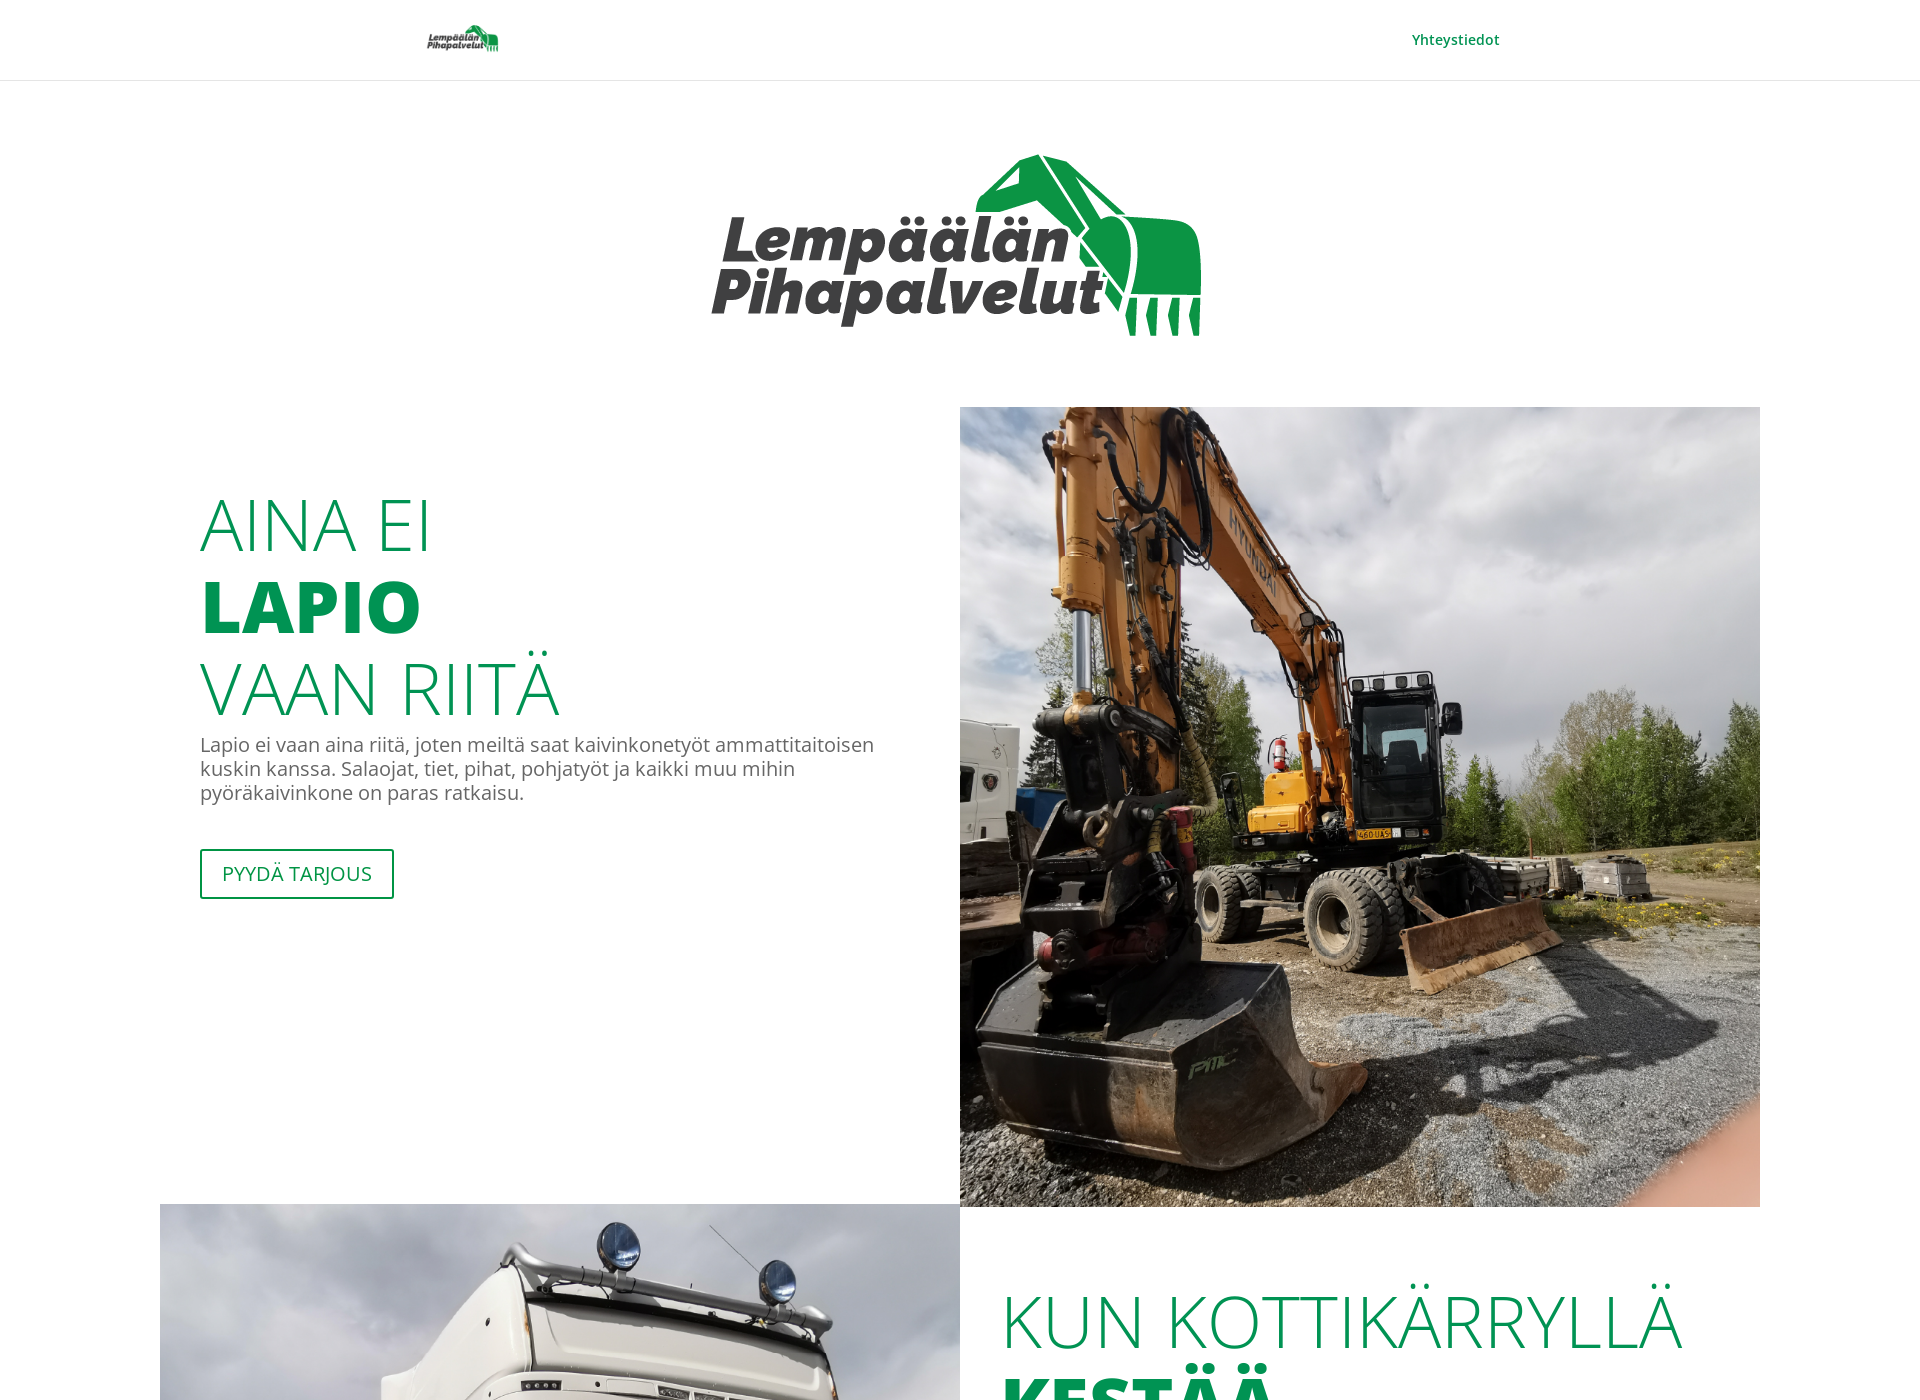 Skärmdump för lempaalanpihapalvelut.fi